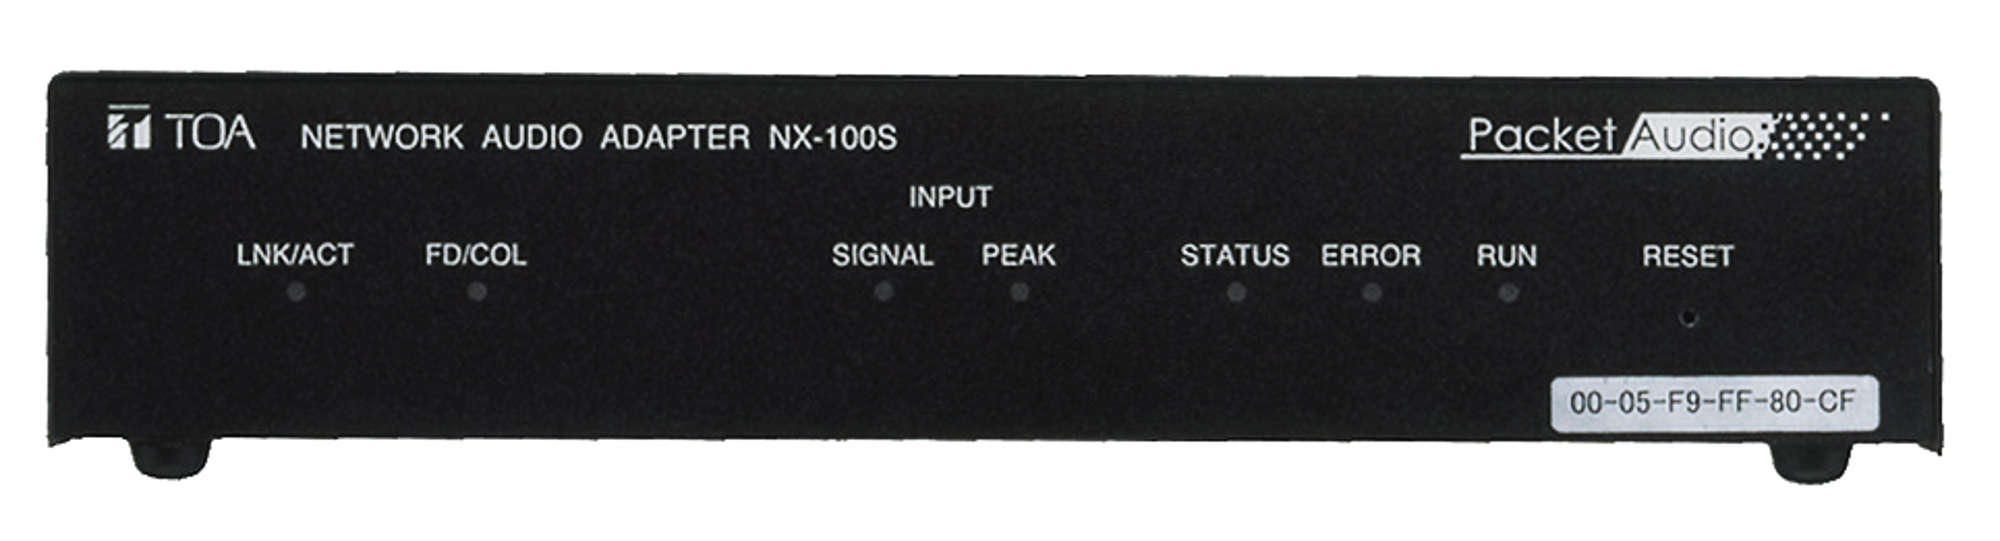 NX-100s_pfle.jpg